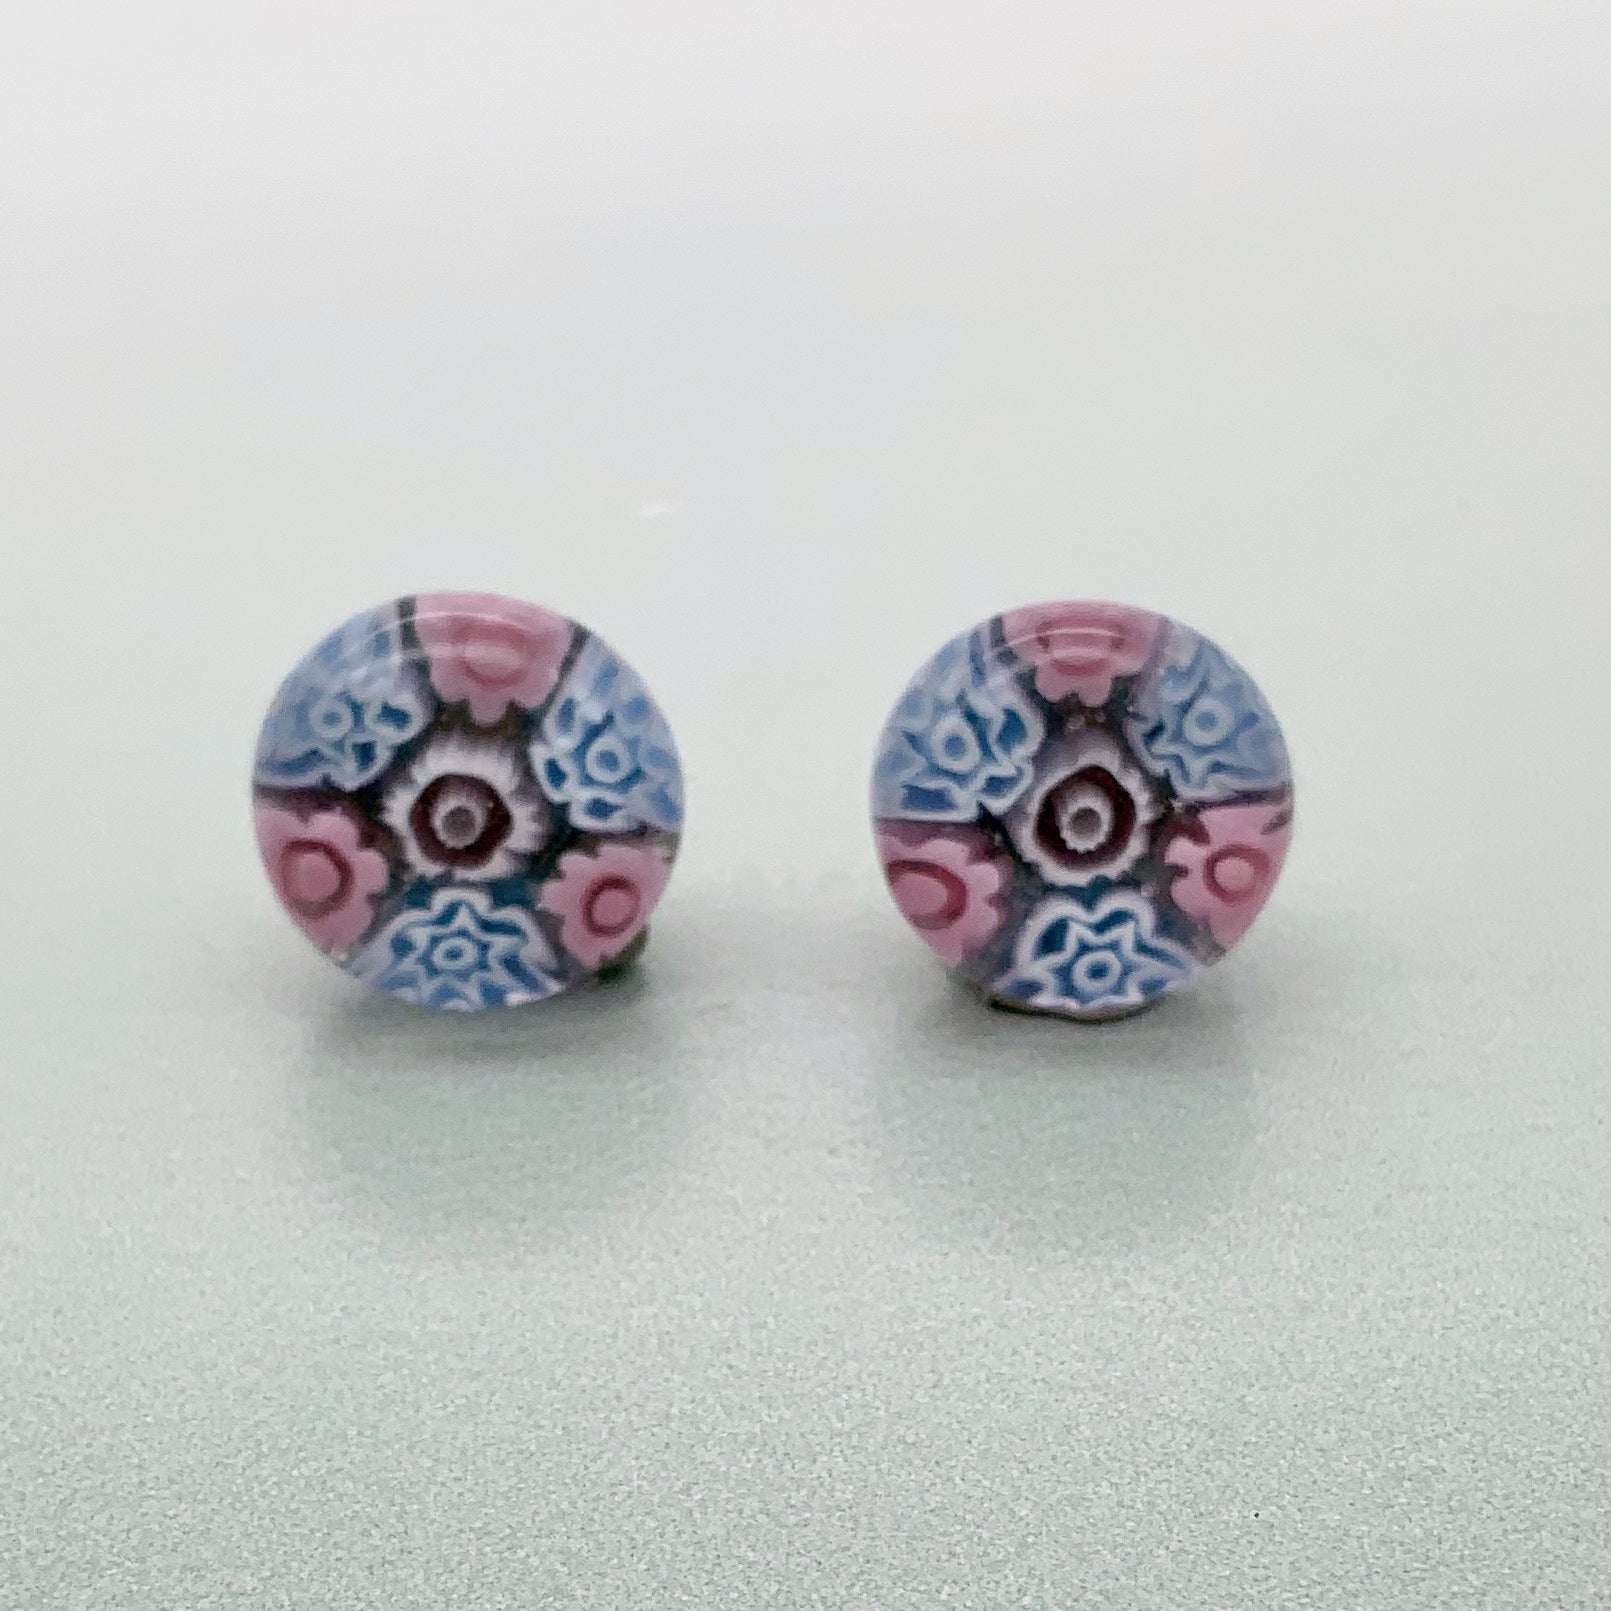 Pink and periwinkle glass fleurette stud earrings